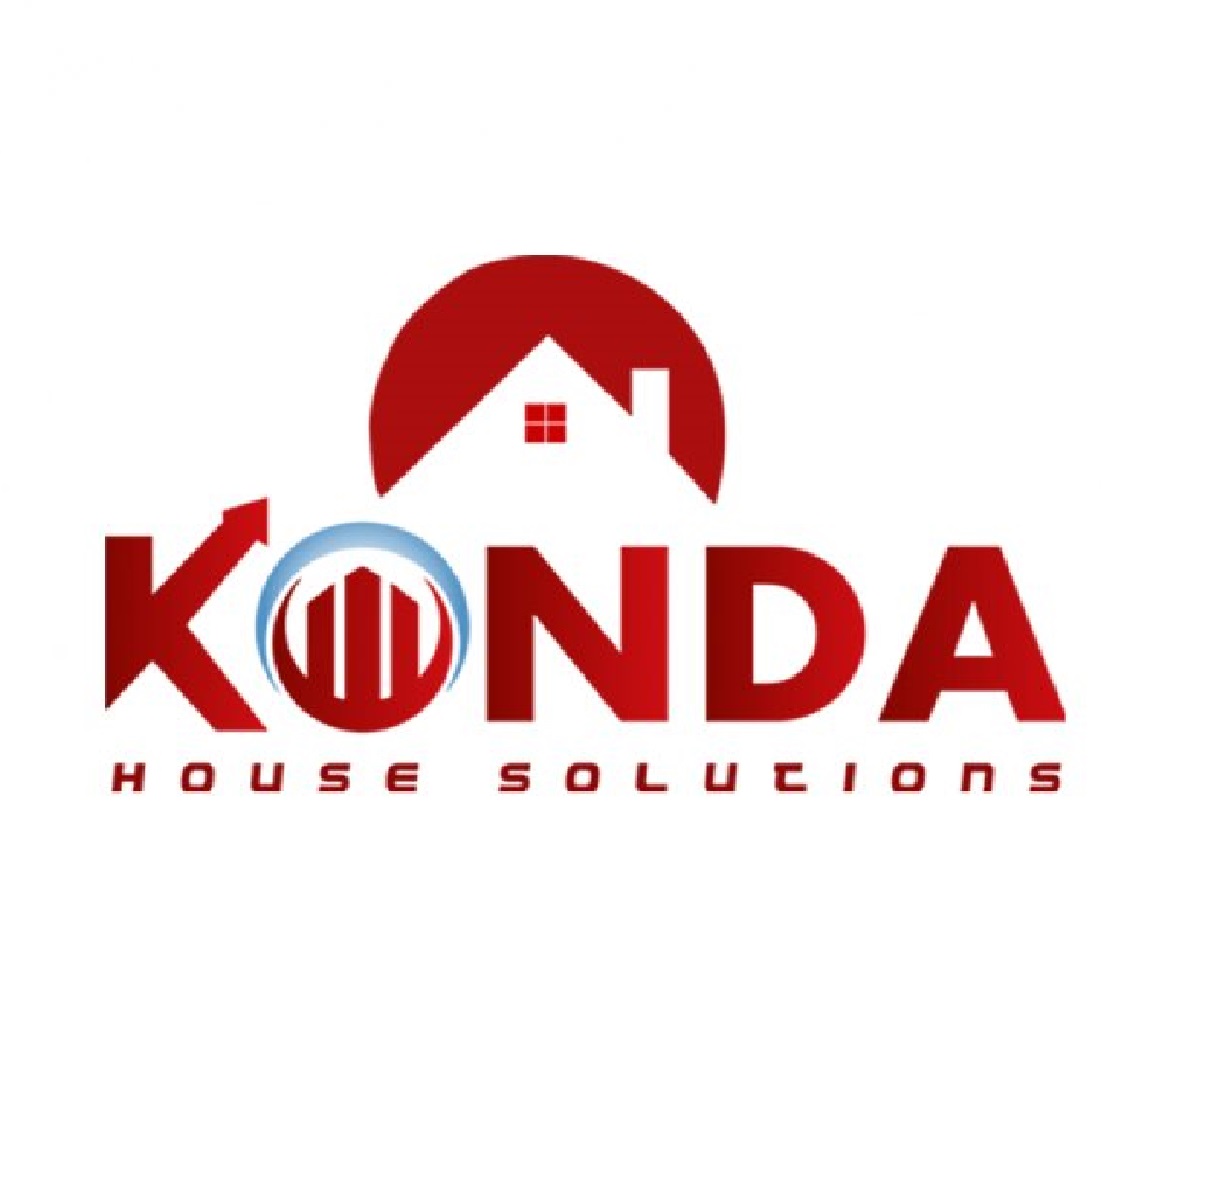 KonDa house solution